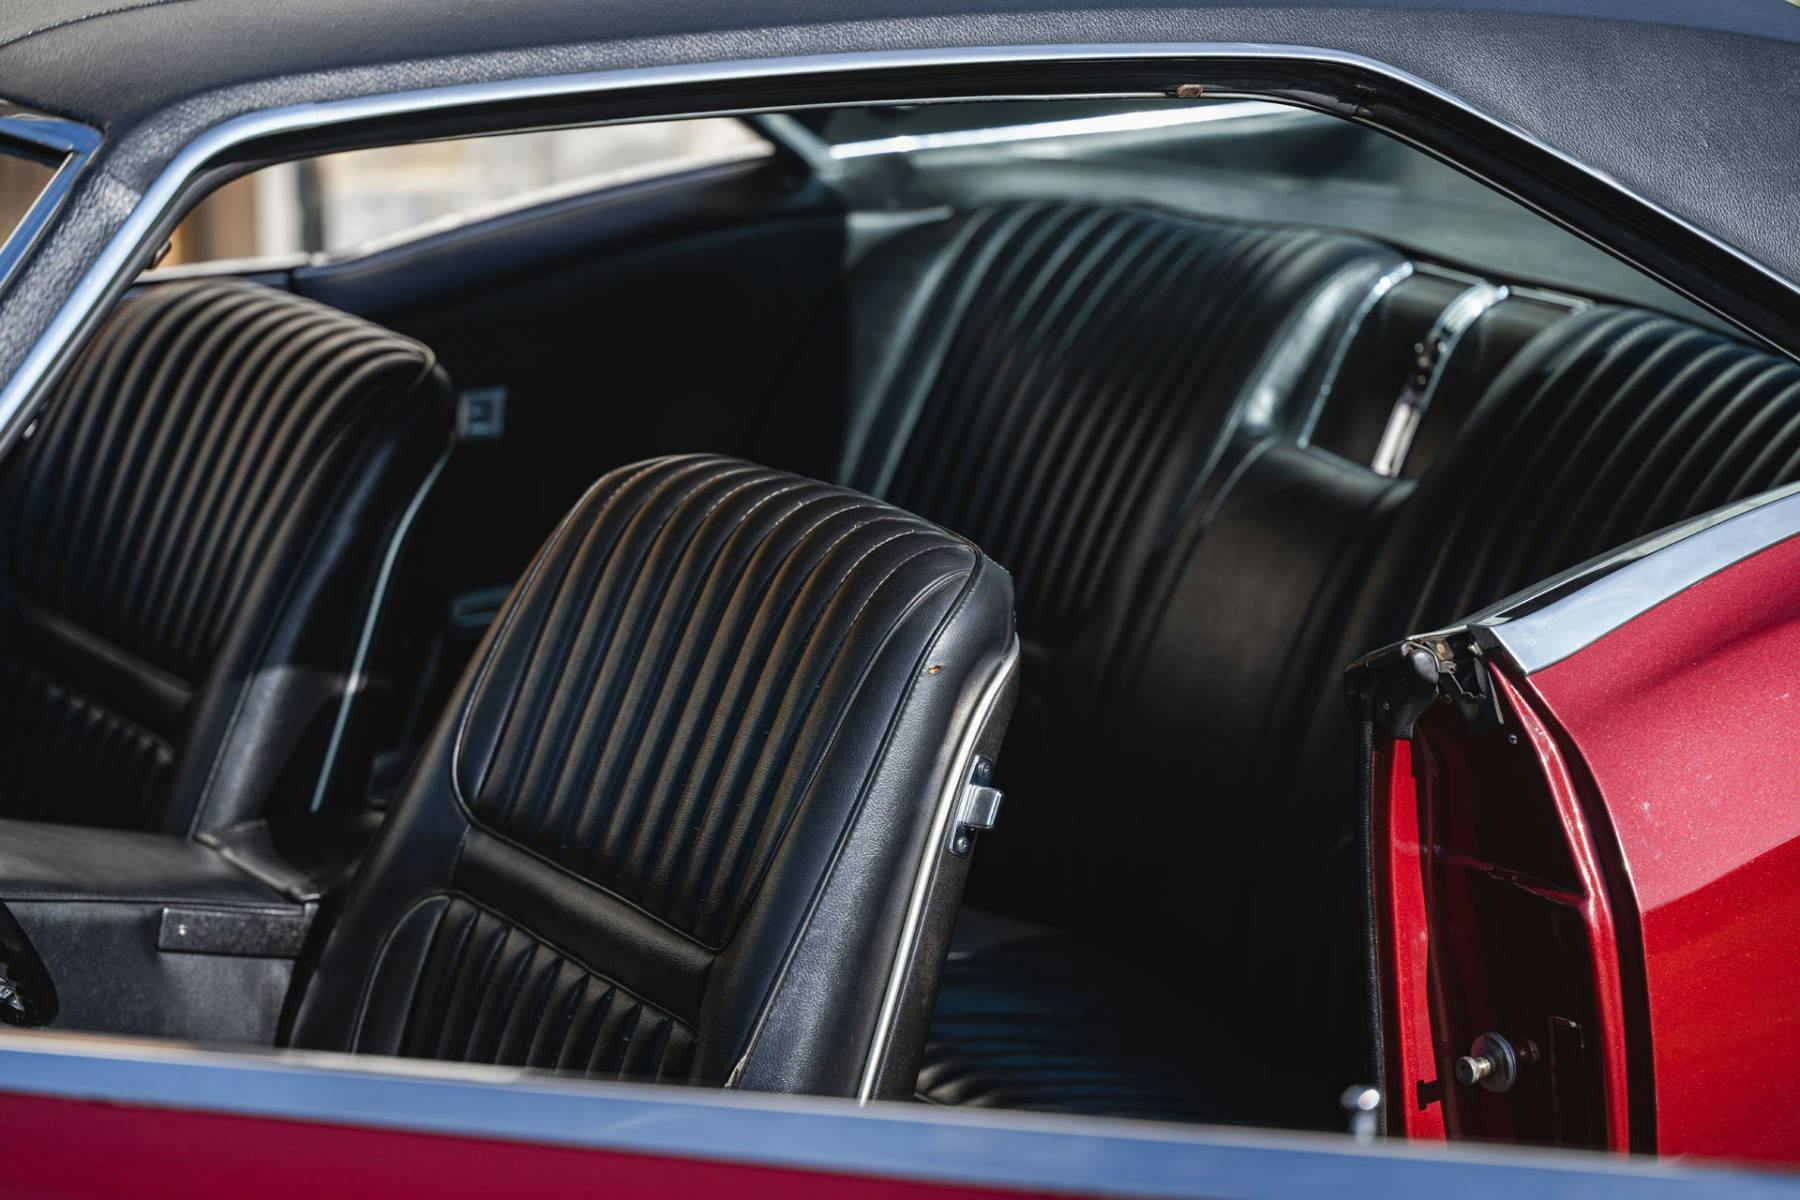 1967 Buick Riviera interior seats